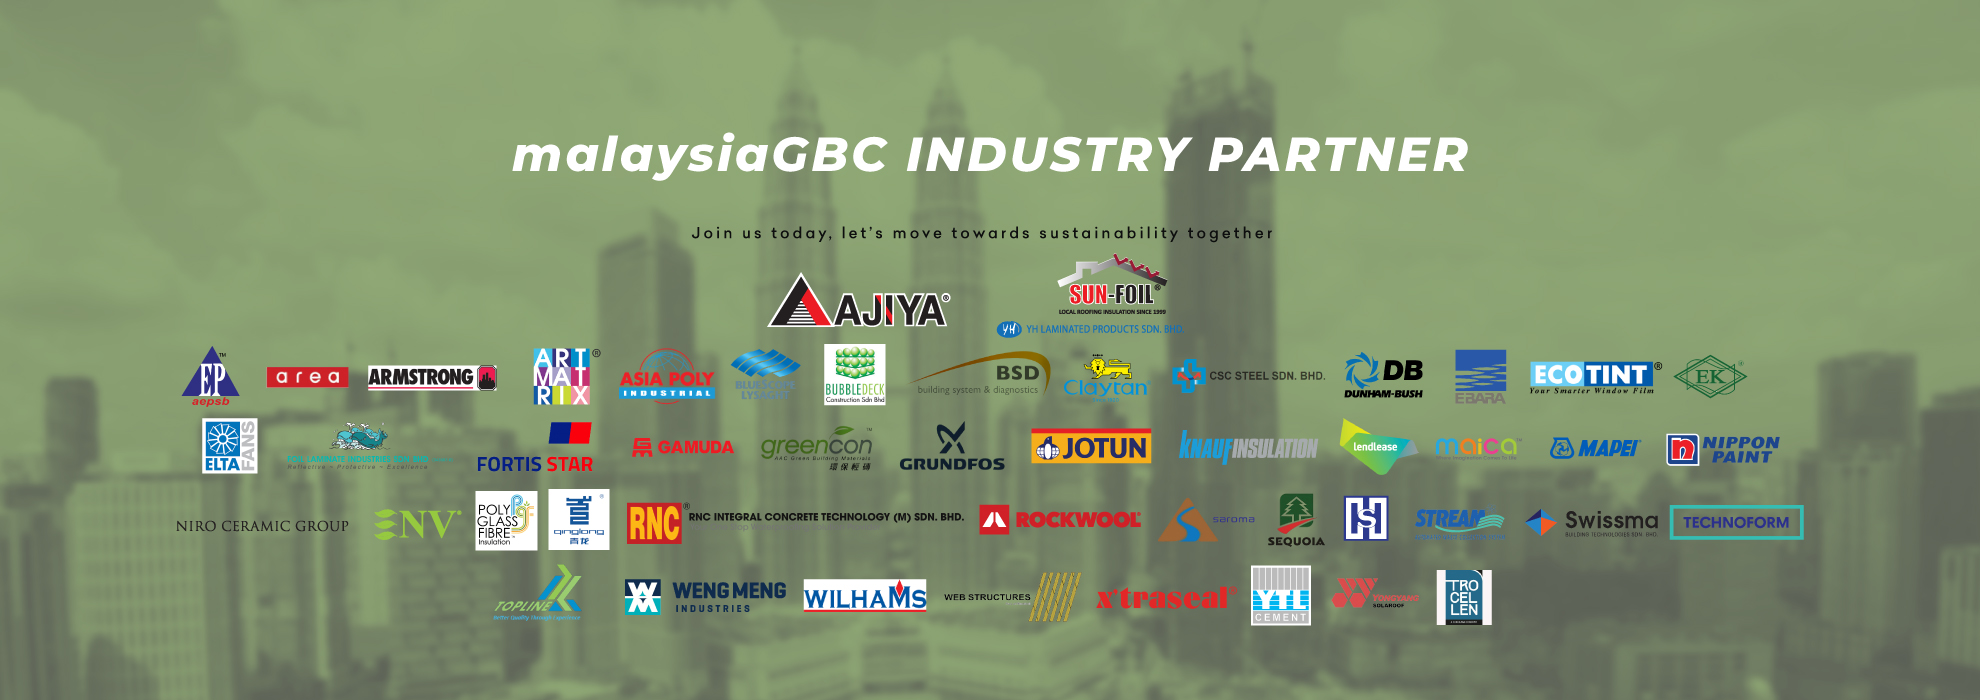 malaysiaGBC_Website-Banner_Industry-Partner-2